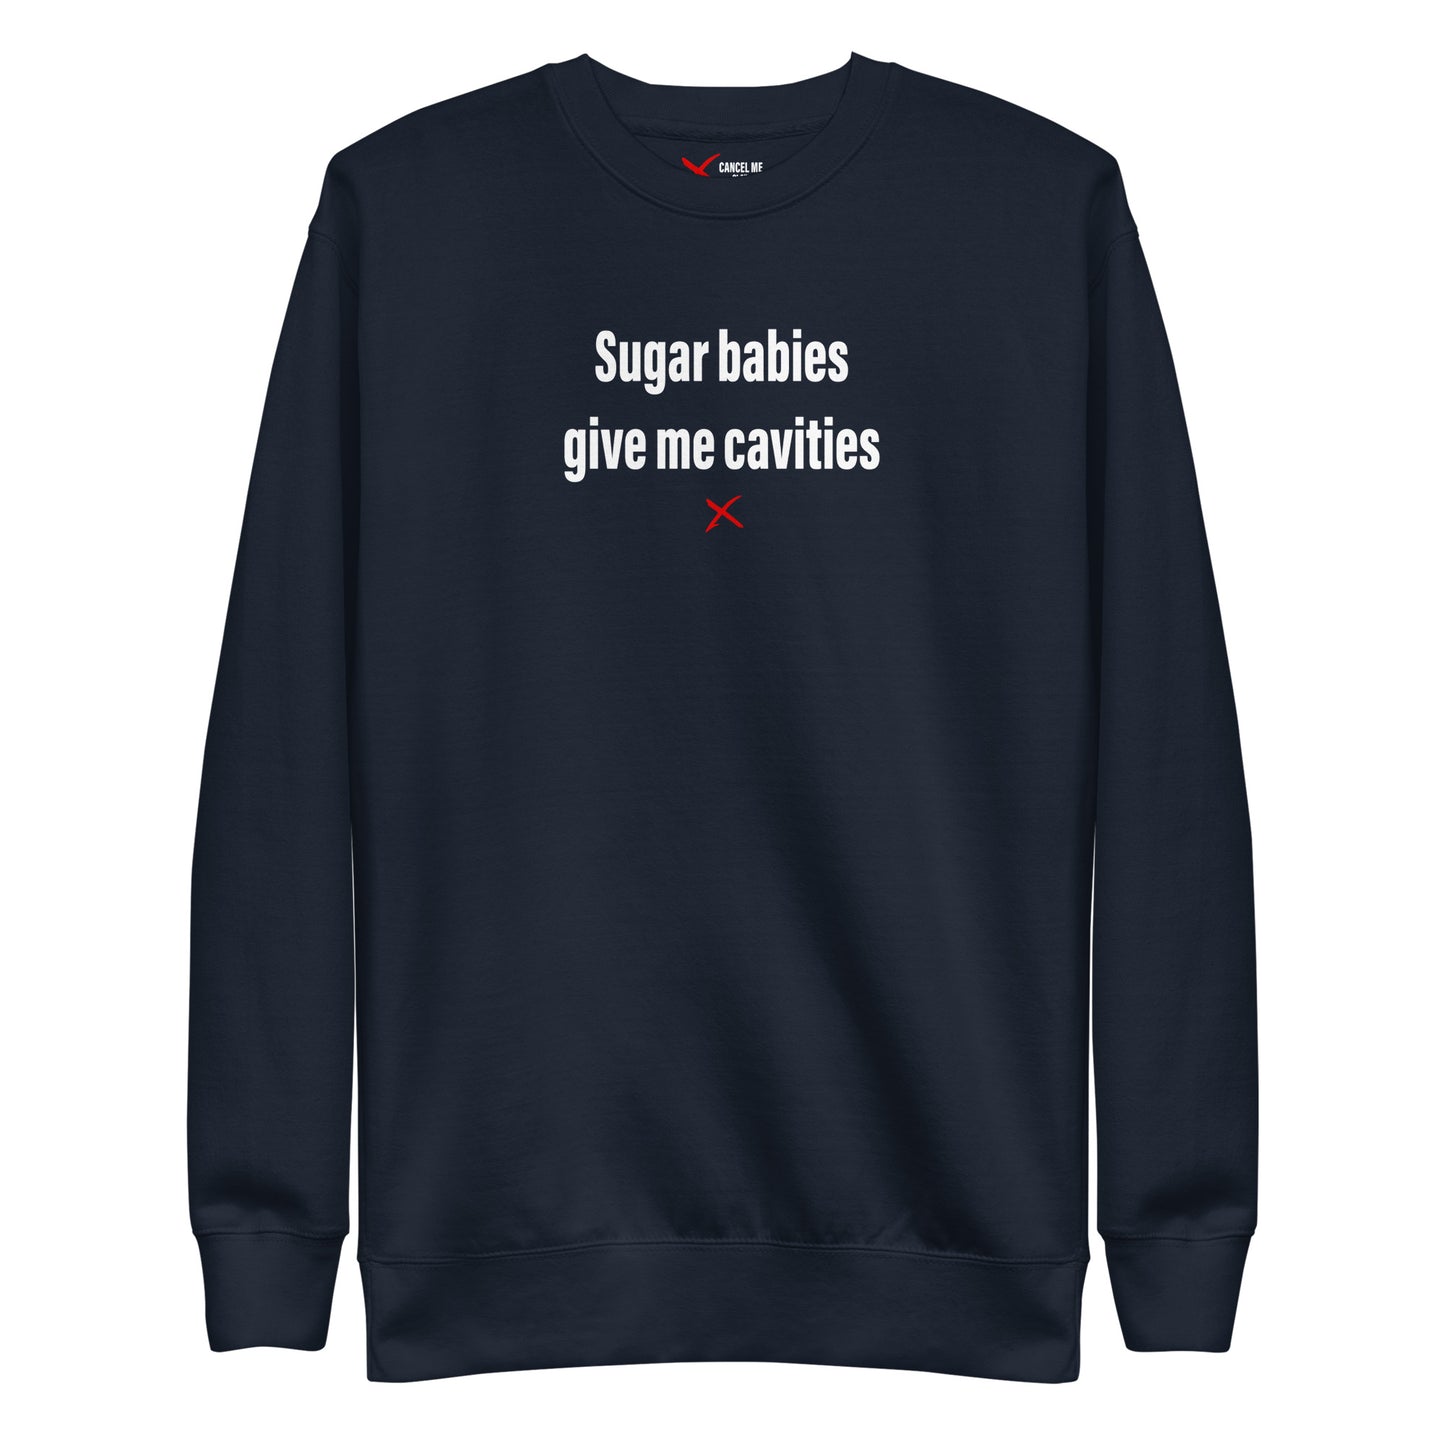 Sugar babies give me cavities - Sweatshirt